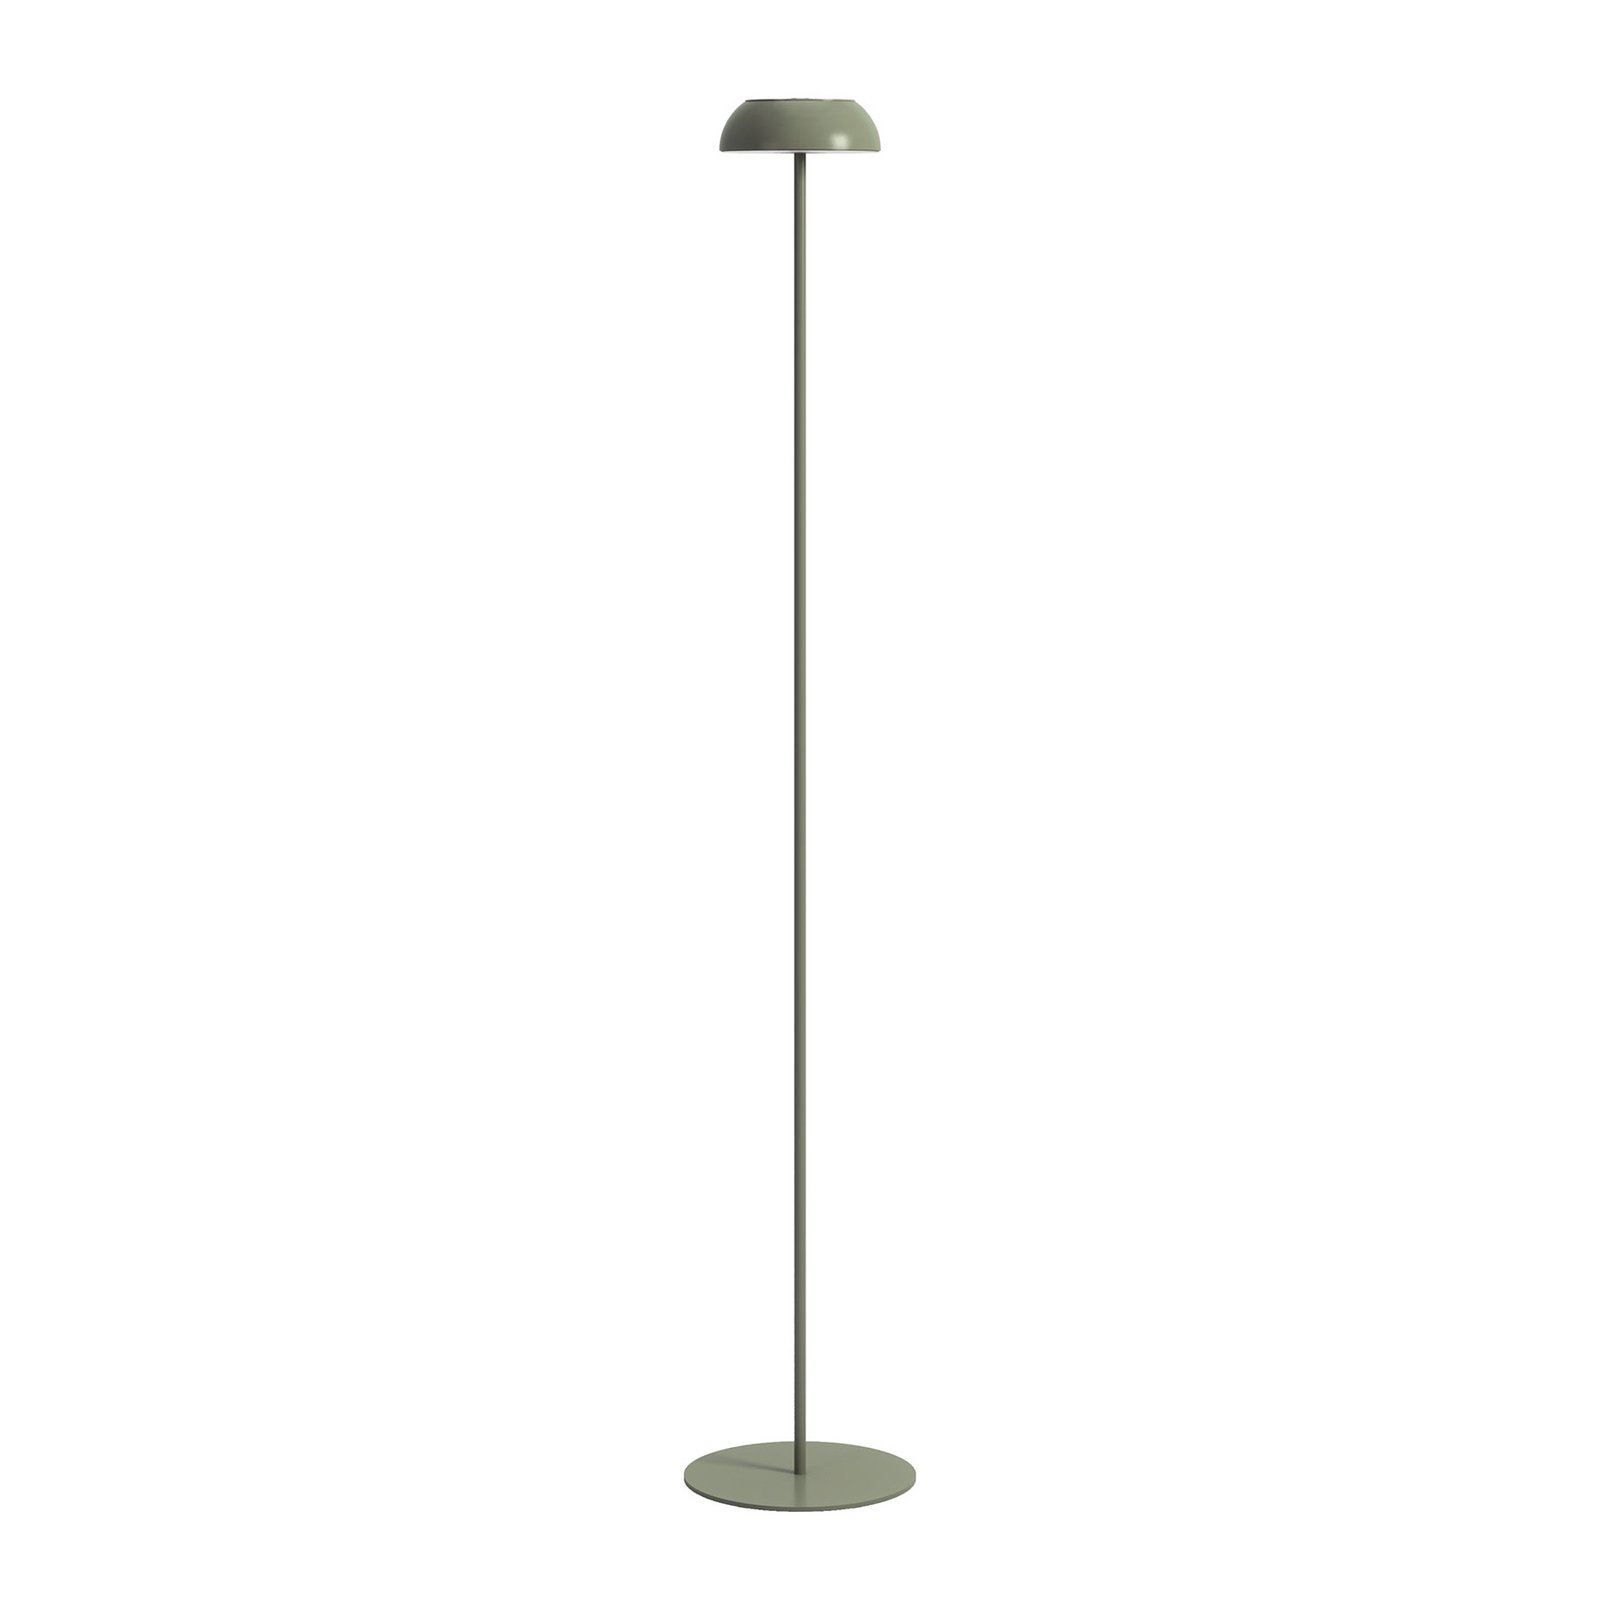 Axolight Float lampadaire de designer LED, vert